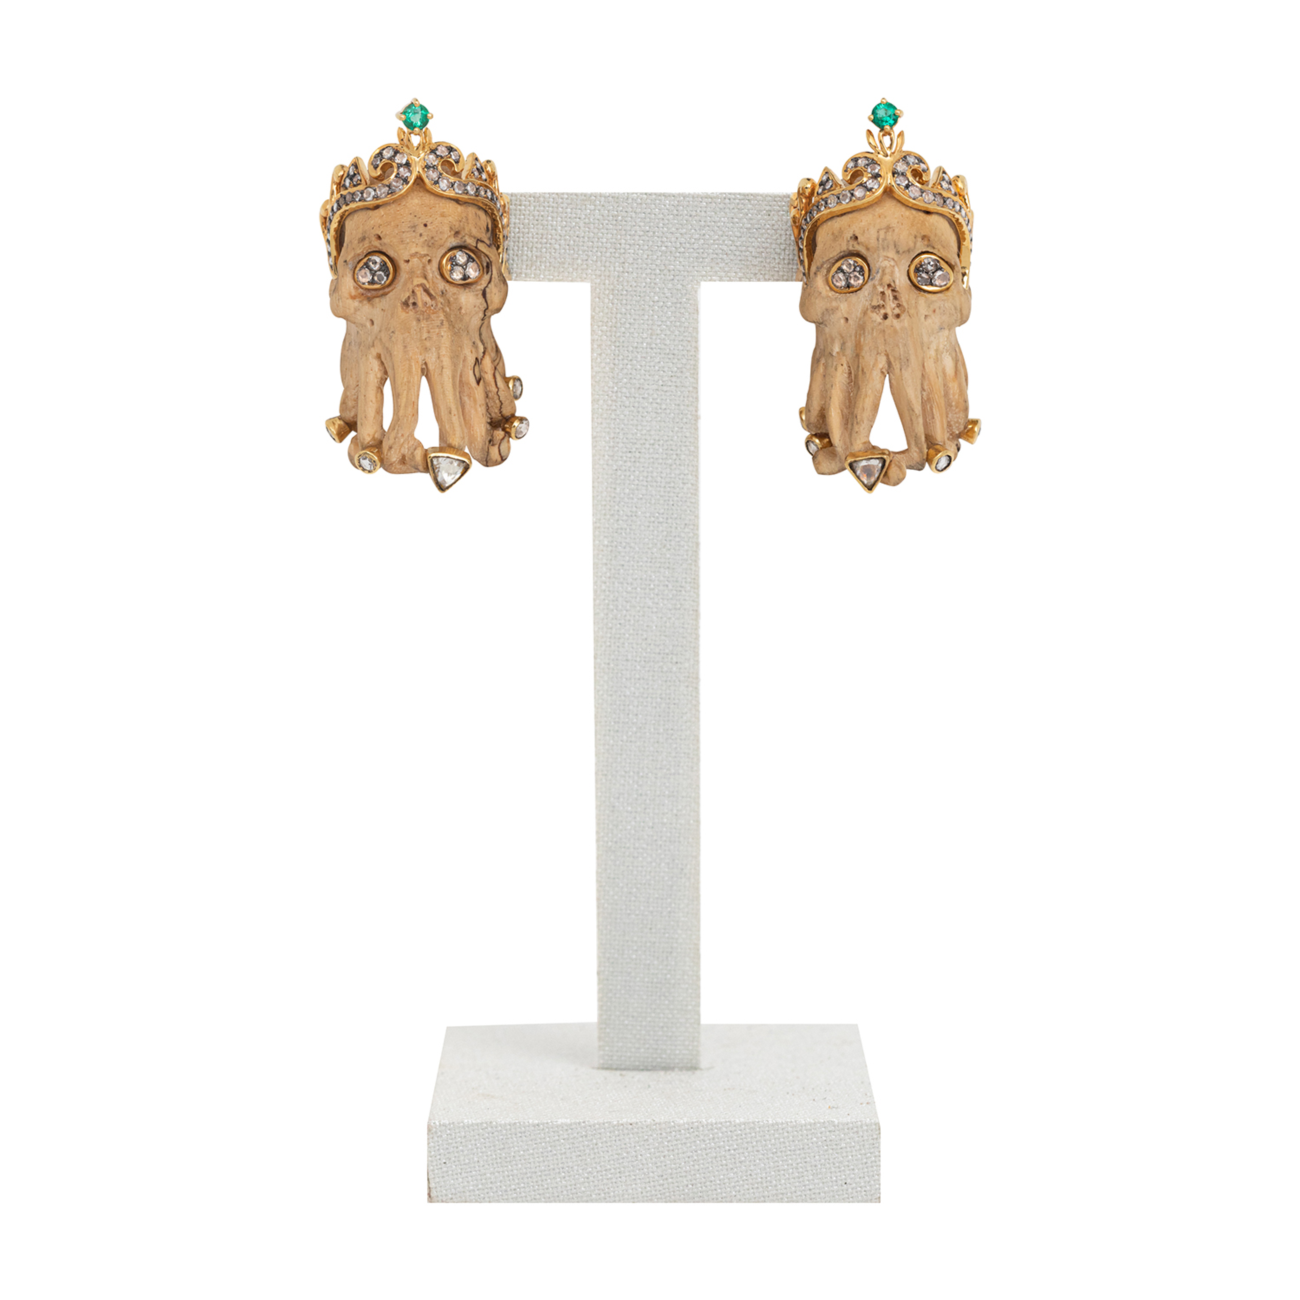 “Davy Jones” – Pirates of the Caribbean” Inspired Octopus Earrings